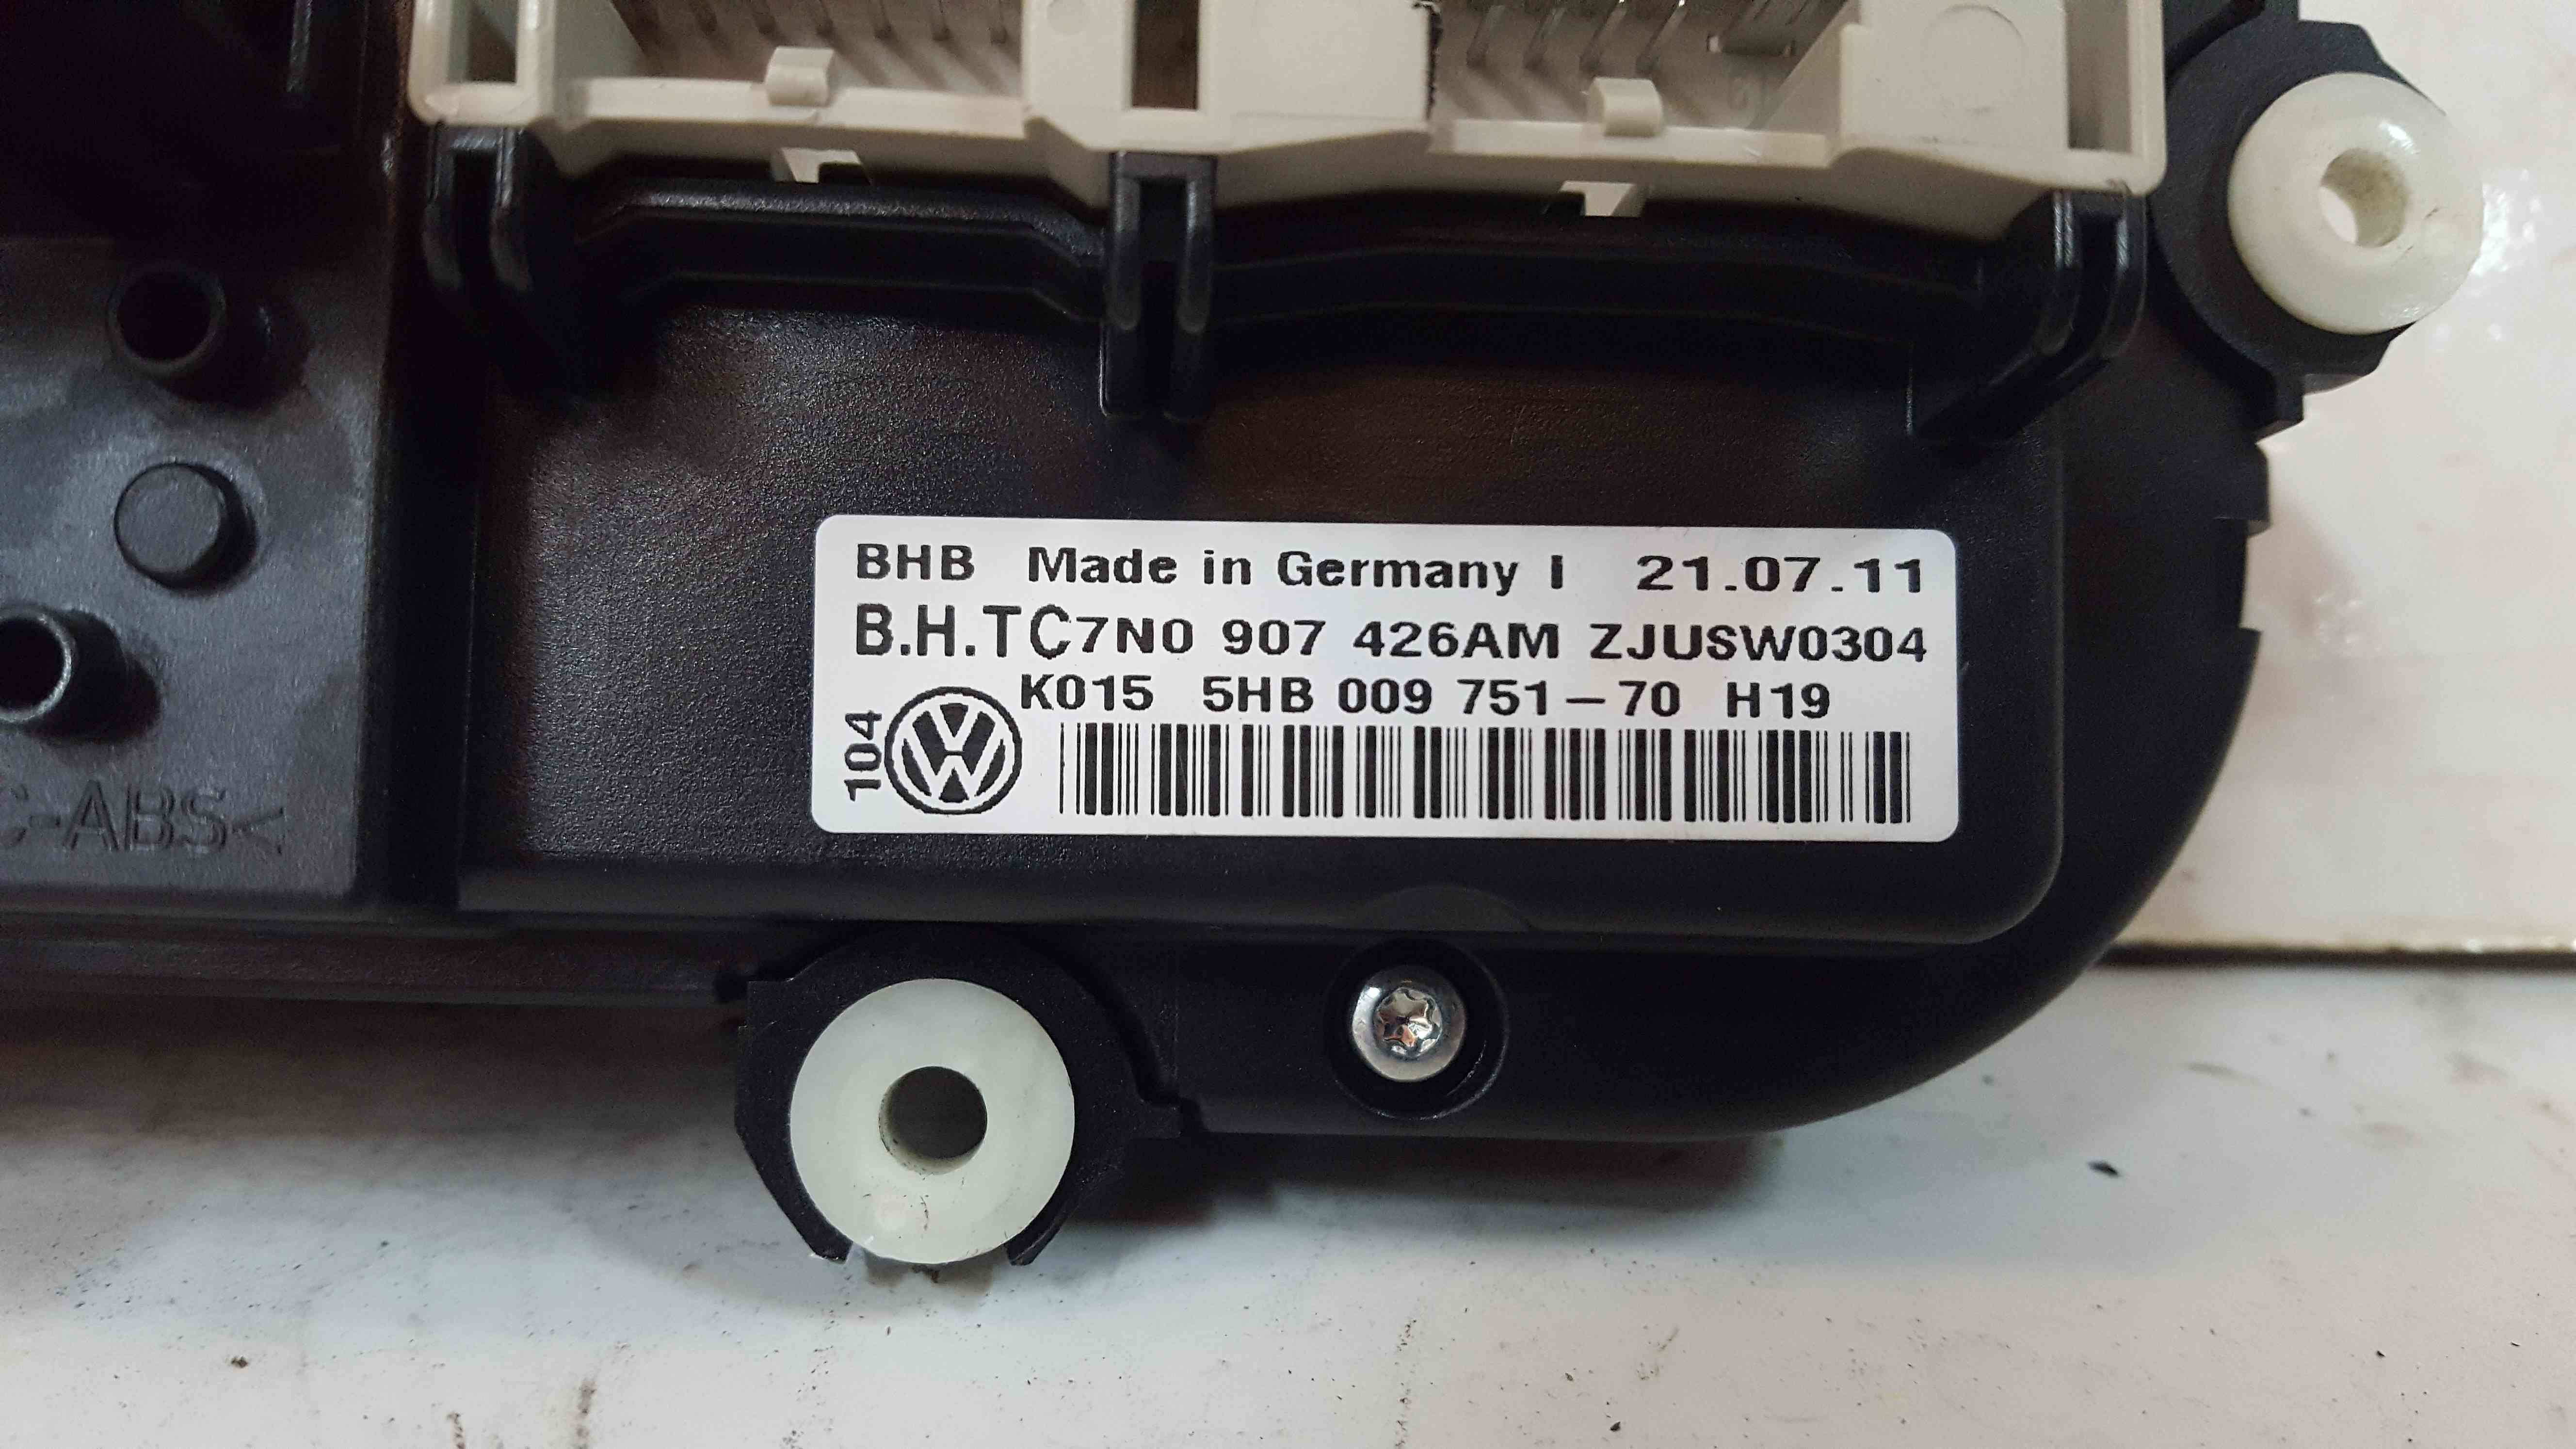 Volkswagen Golf MK6 2009-2012 Heater Controls Dials Switches Aircon 7N0907426am